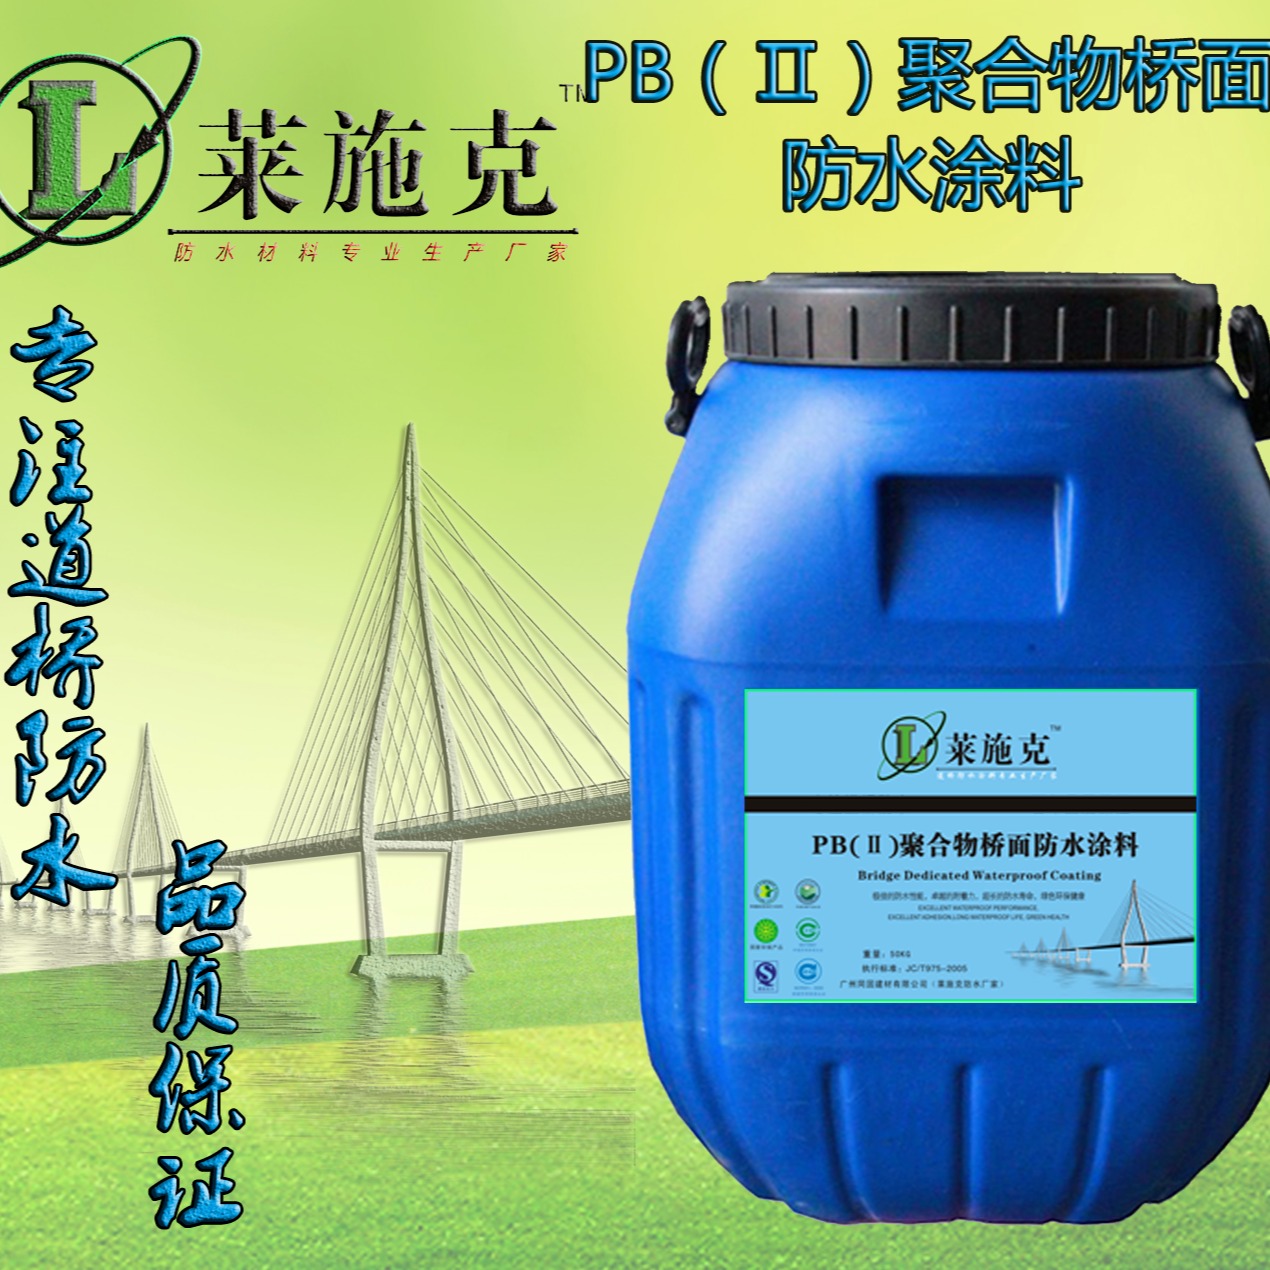 PB-II聚合物防水涂料厚度要求与桥面抛丸